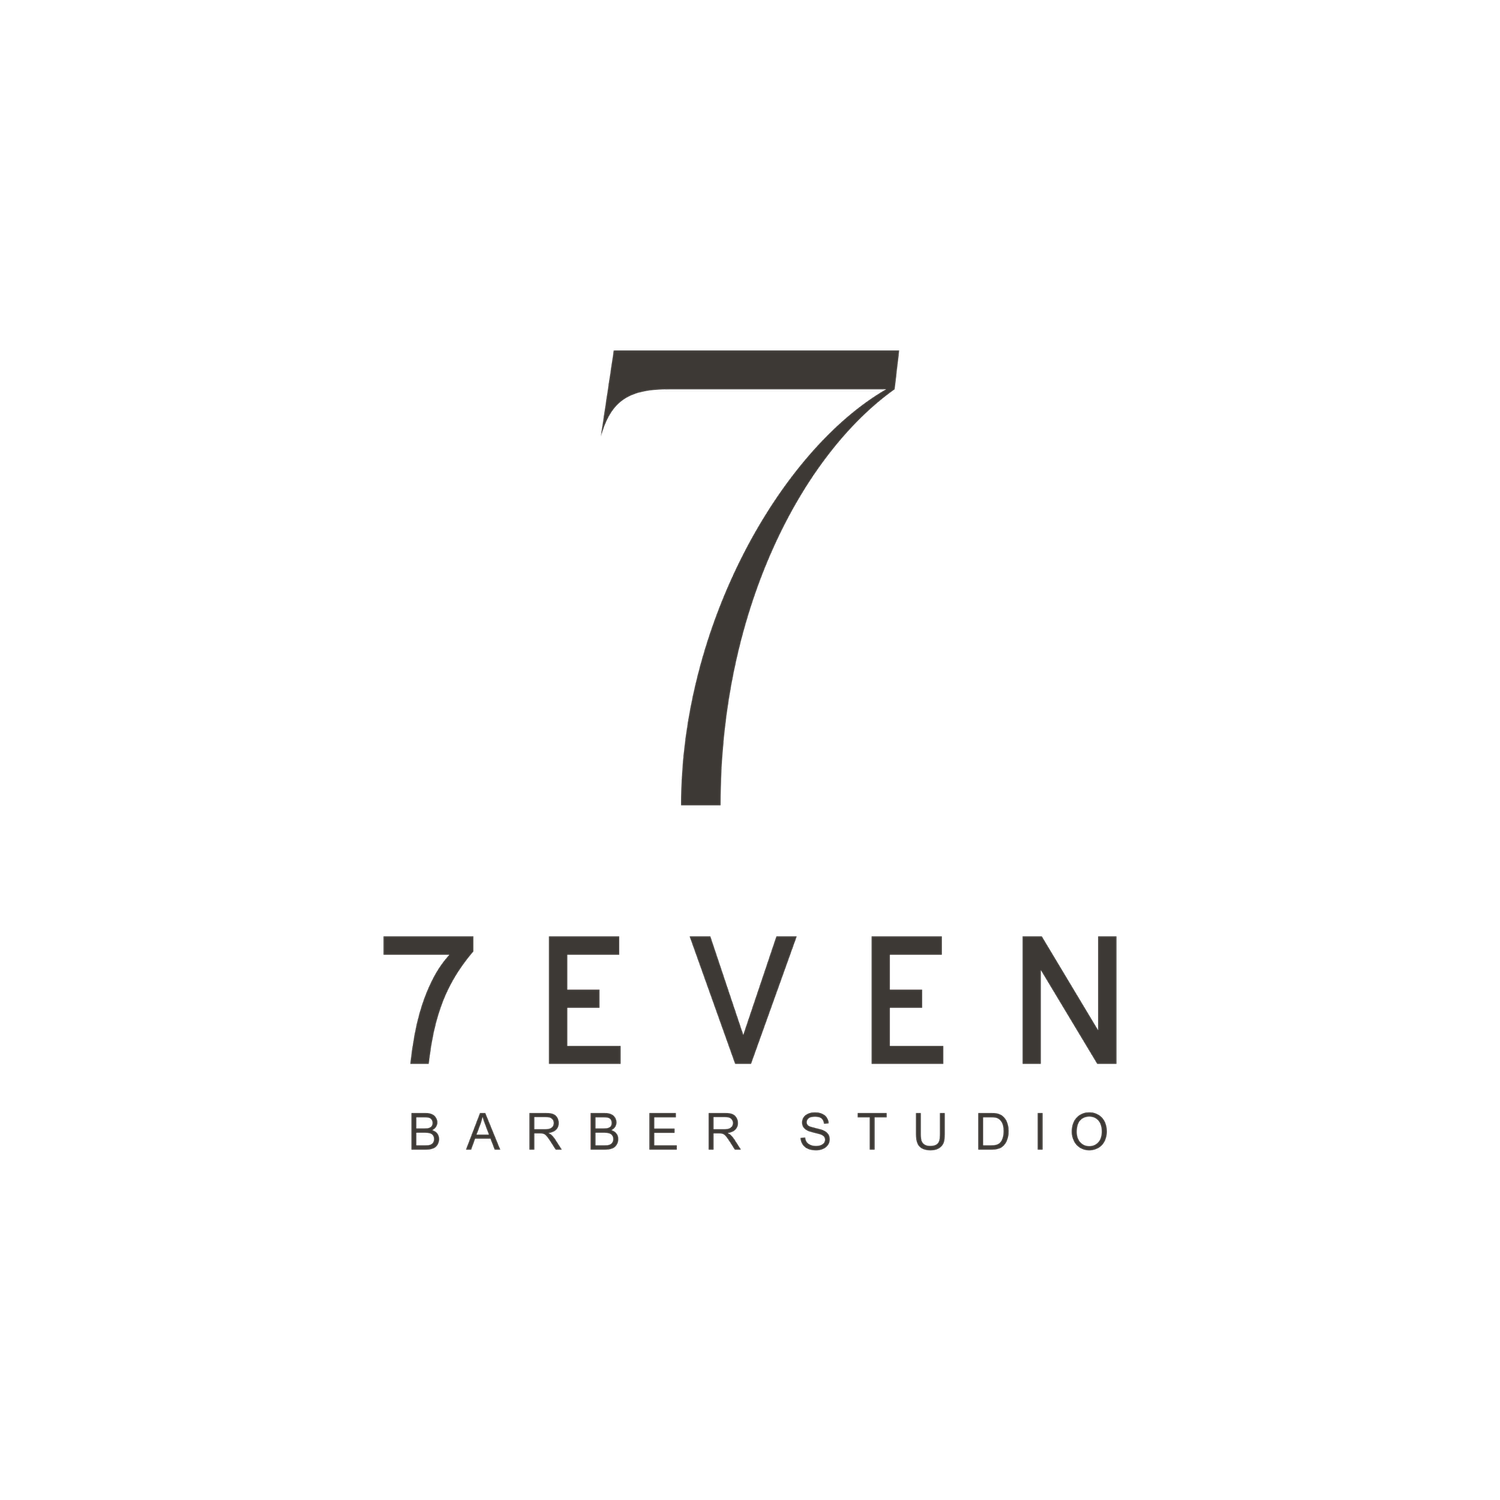 7Even Barber Studio